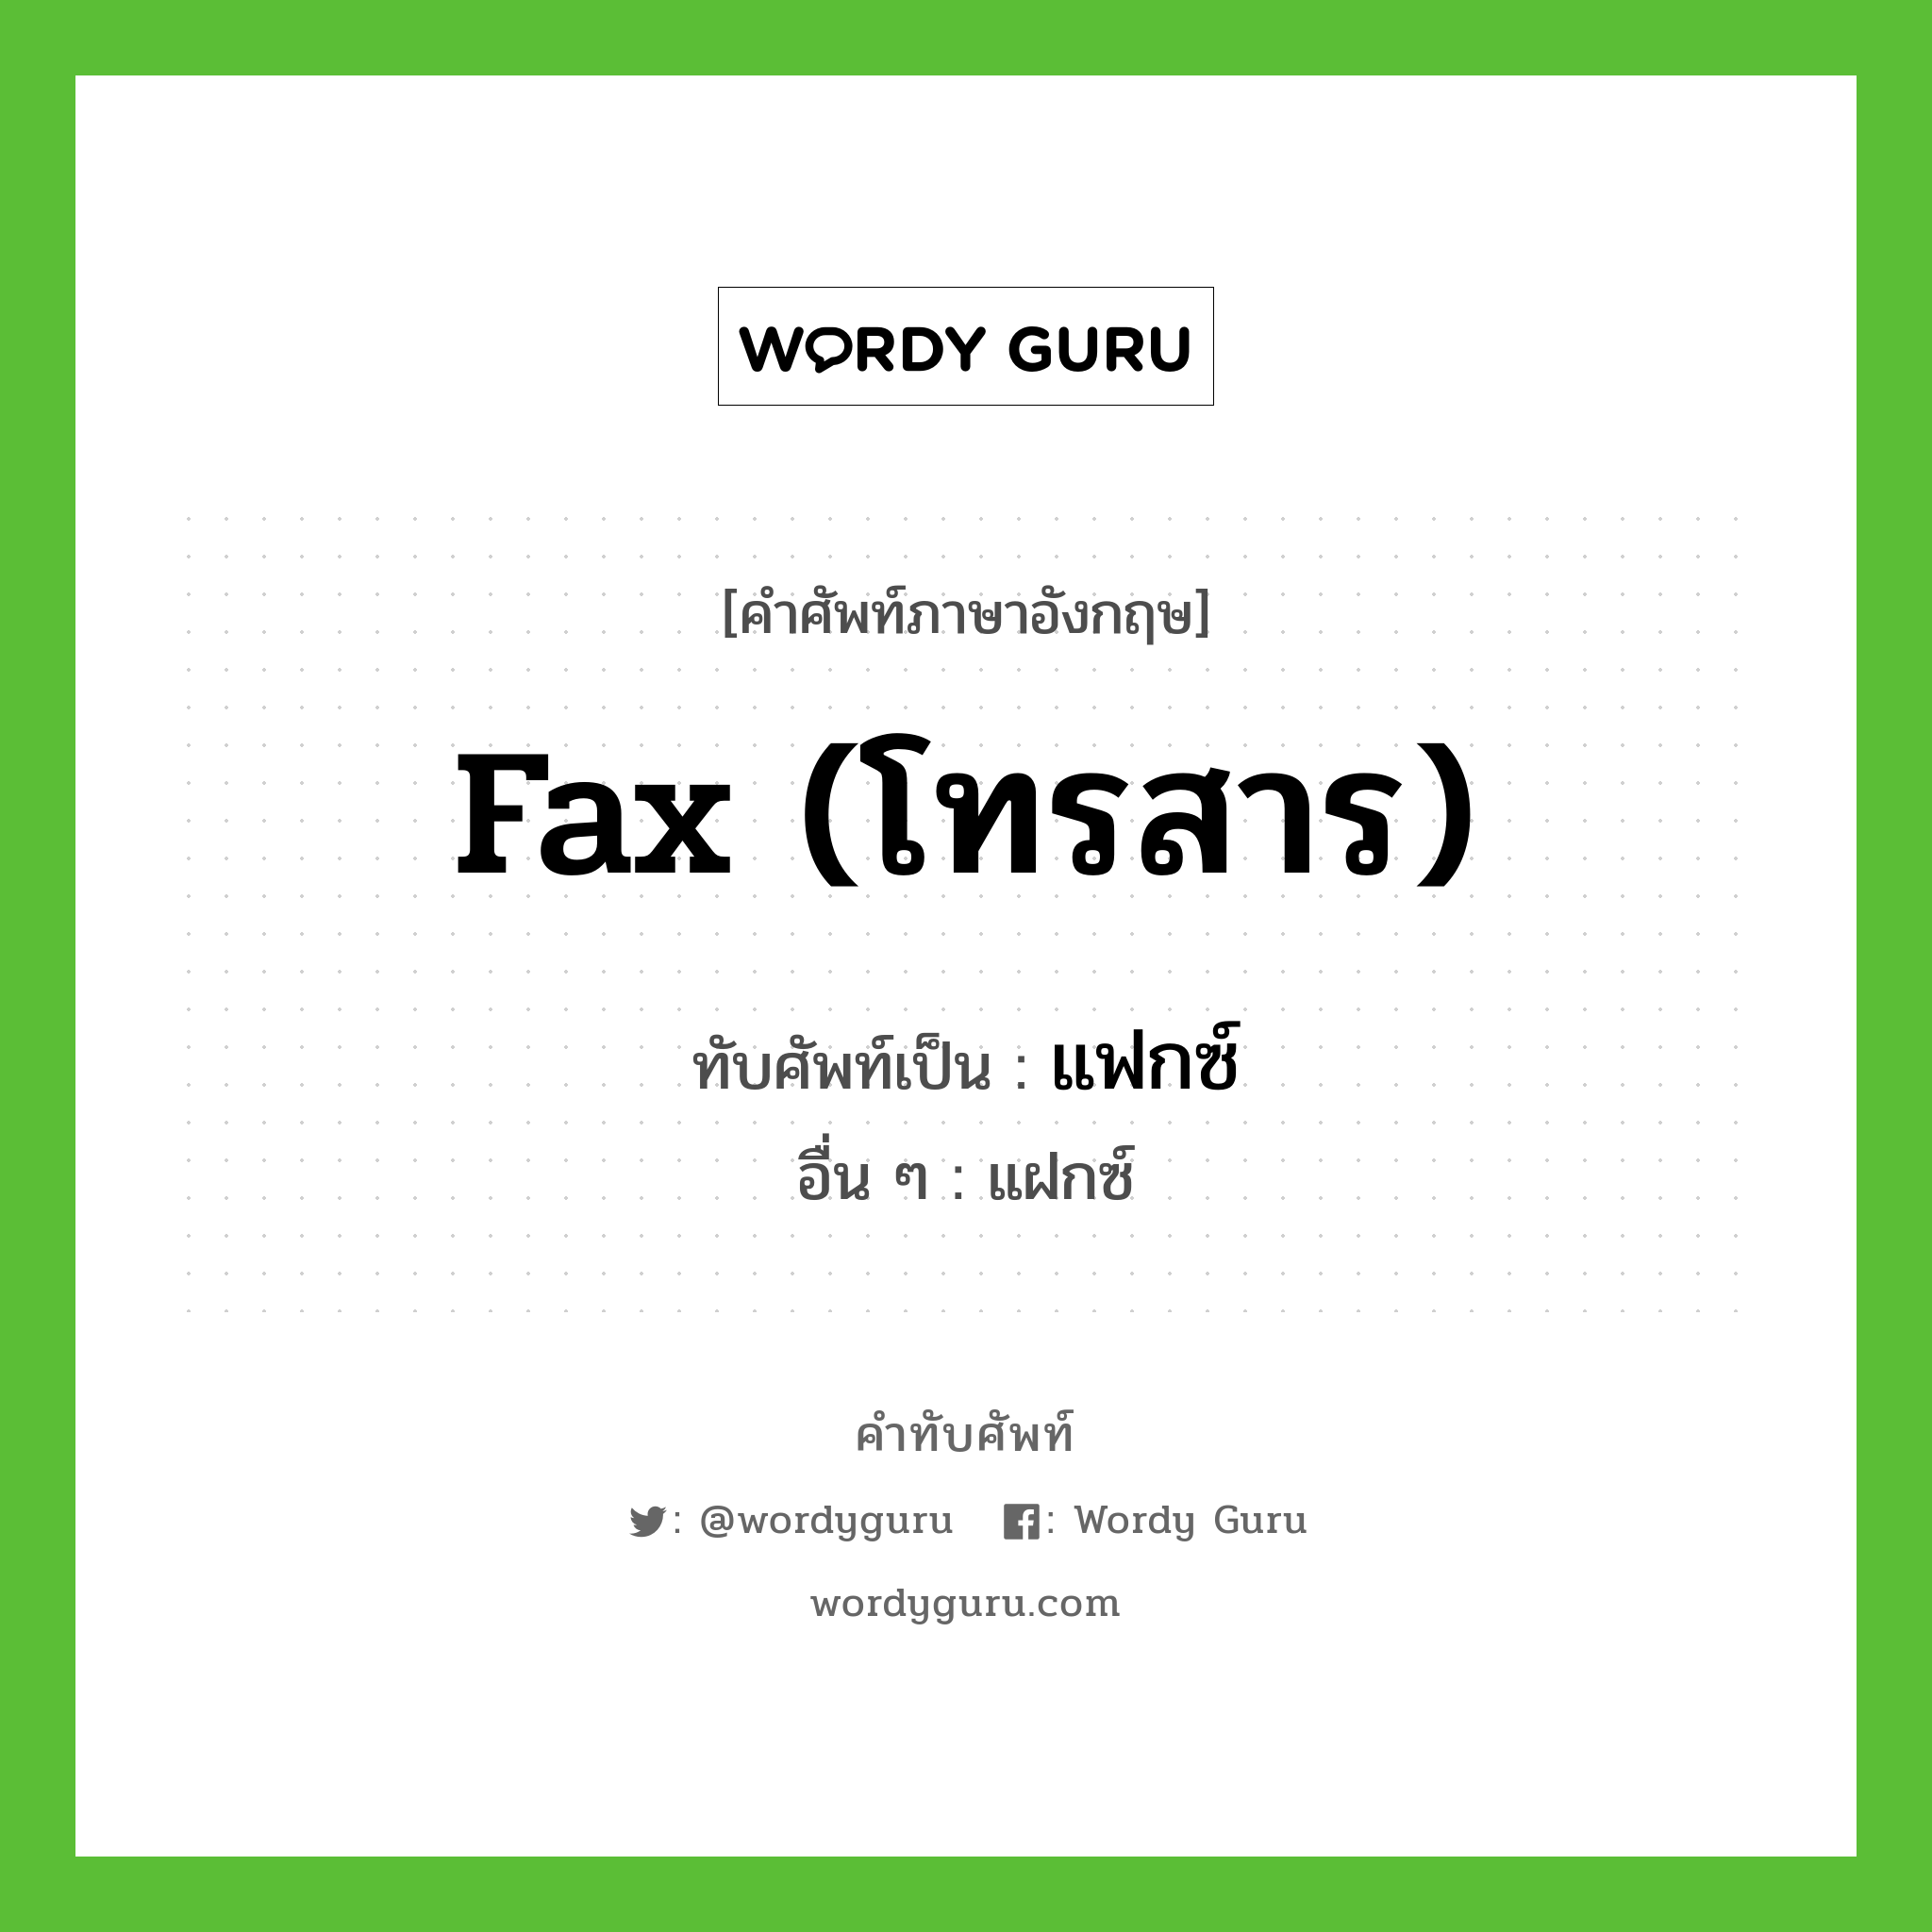 fax (โทรสาร) เขียนเป็นคำไทยว่าอะไร?, คำศัพท์ภาษาอังกฤษ fax (โทรสาร) ทับศัพท์เป็น แฟกซ์ อื่น ๆ แฝกซ์